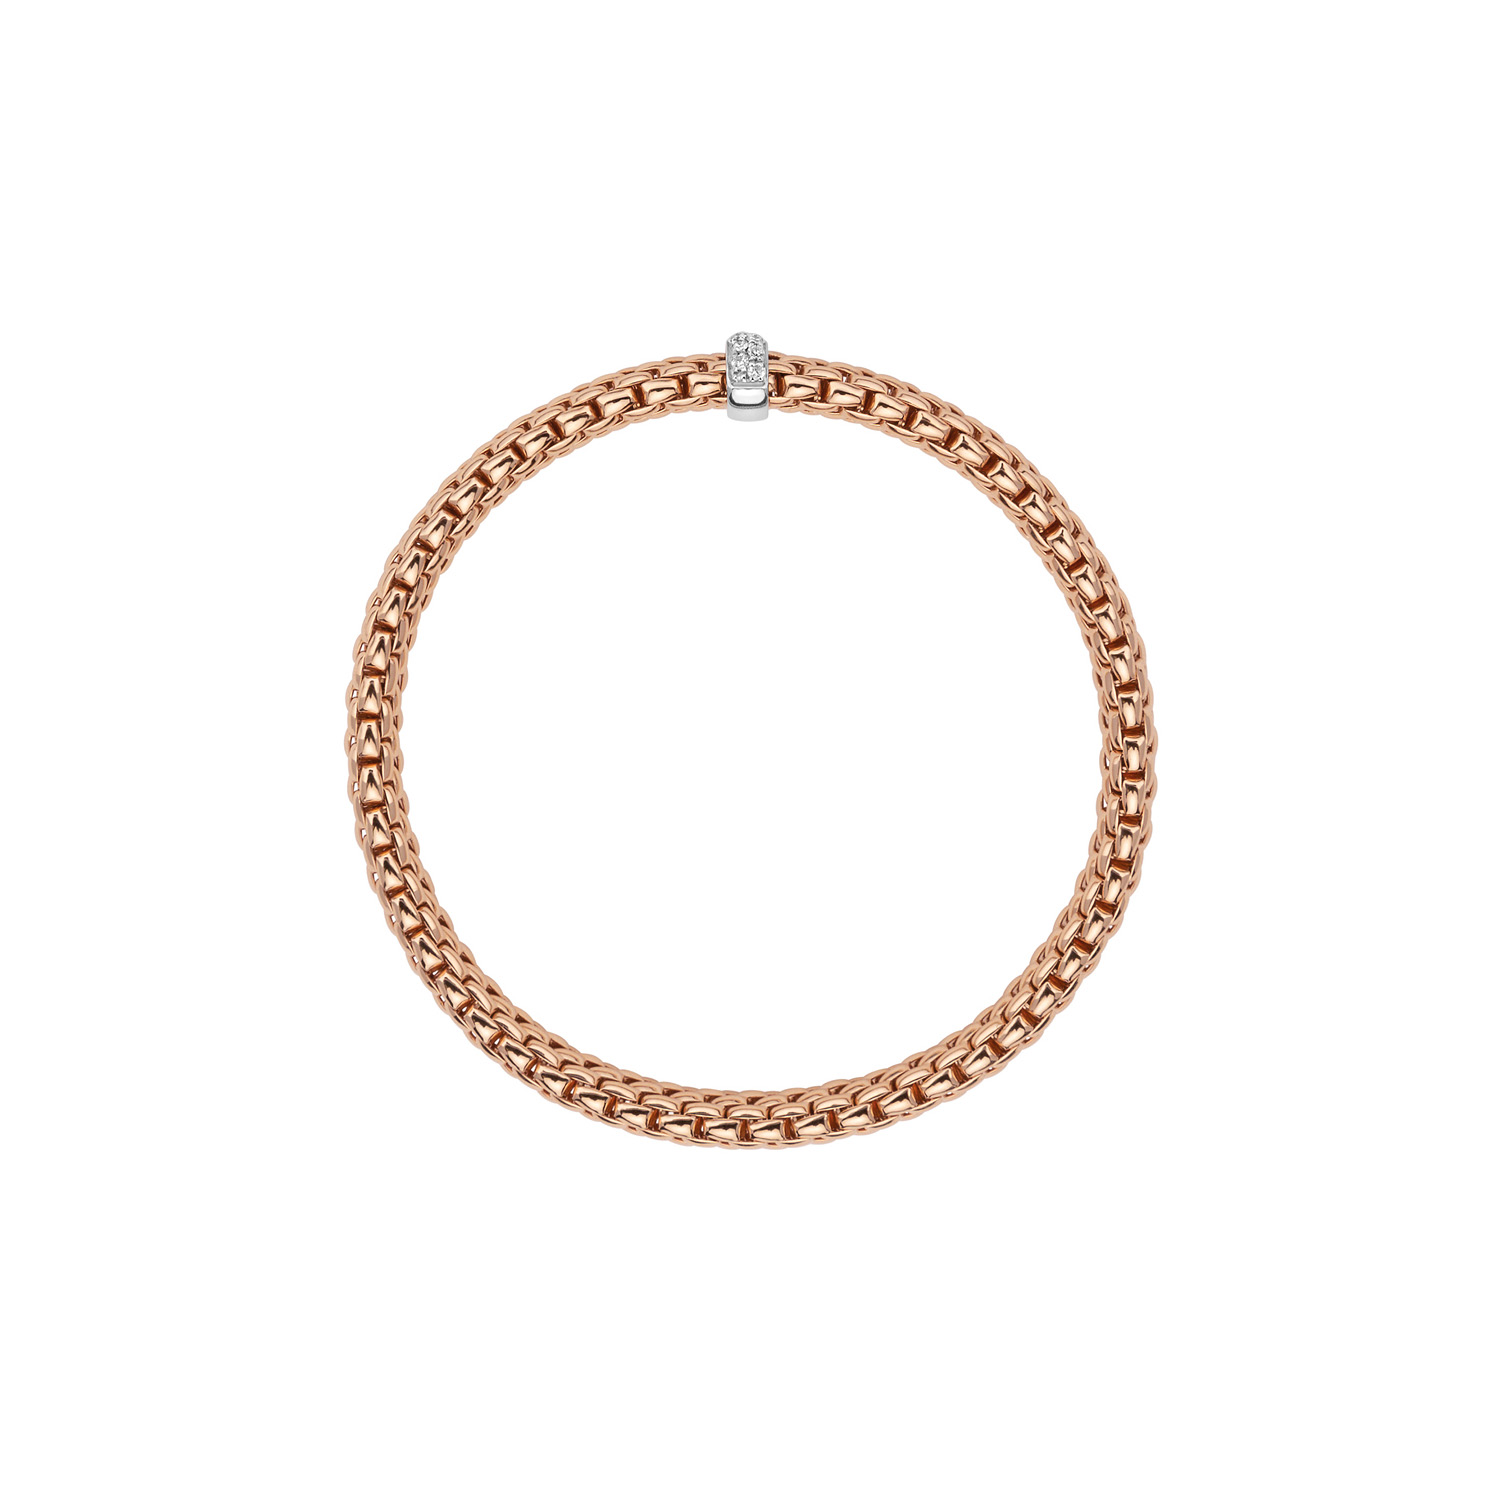 Fope Flex it Vendome Bracelet in Rose Gold with Diamonds Size Medium